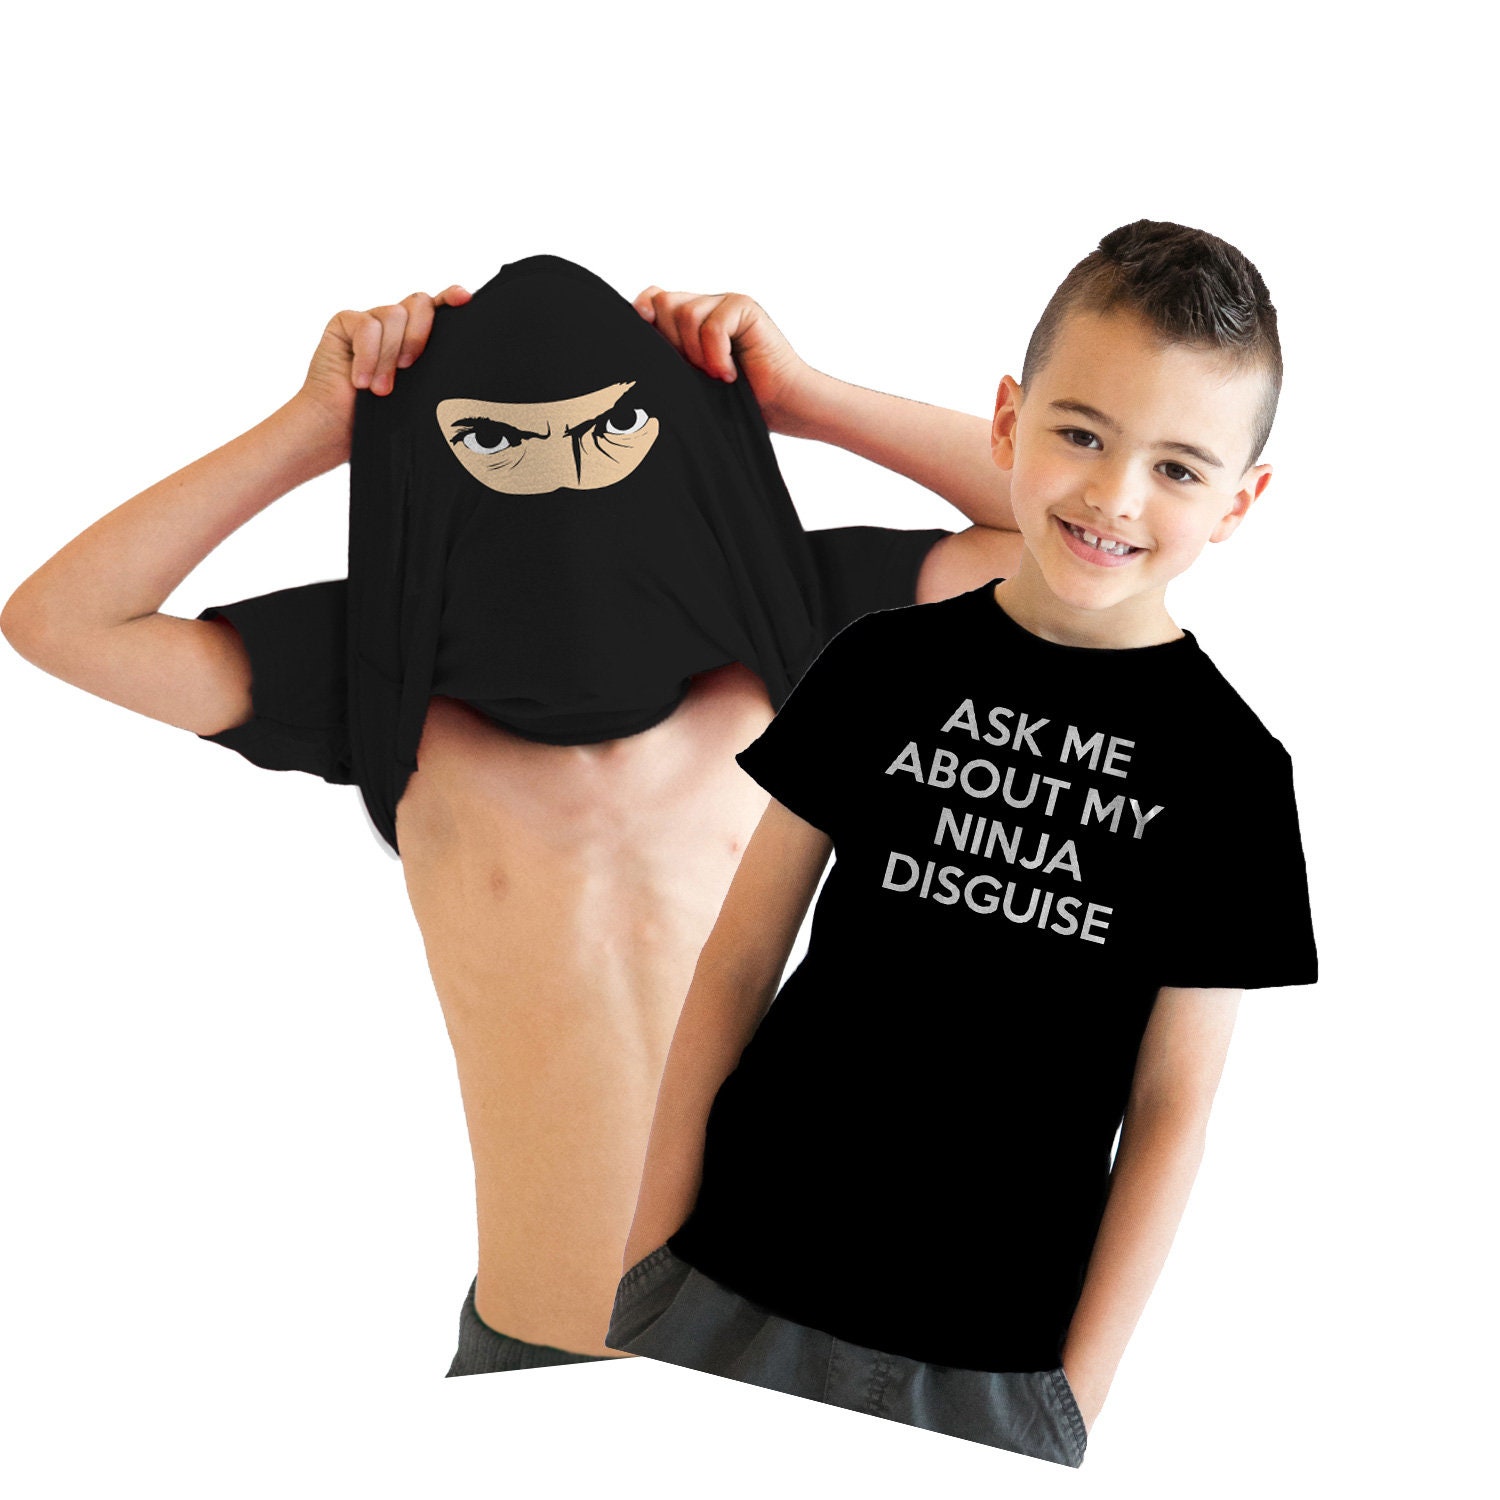 Ninja Flip Shirt, Kids Funny Shirts, Kids Cool Shirt, Kids Ninja Shirt, Ninja Costume, Youth Ask Me About My Ninja Disguise